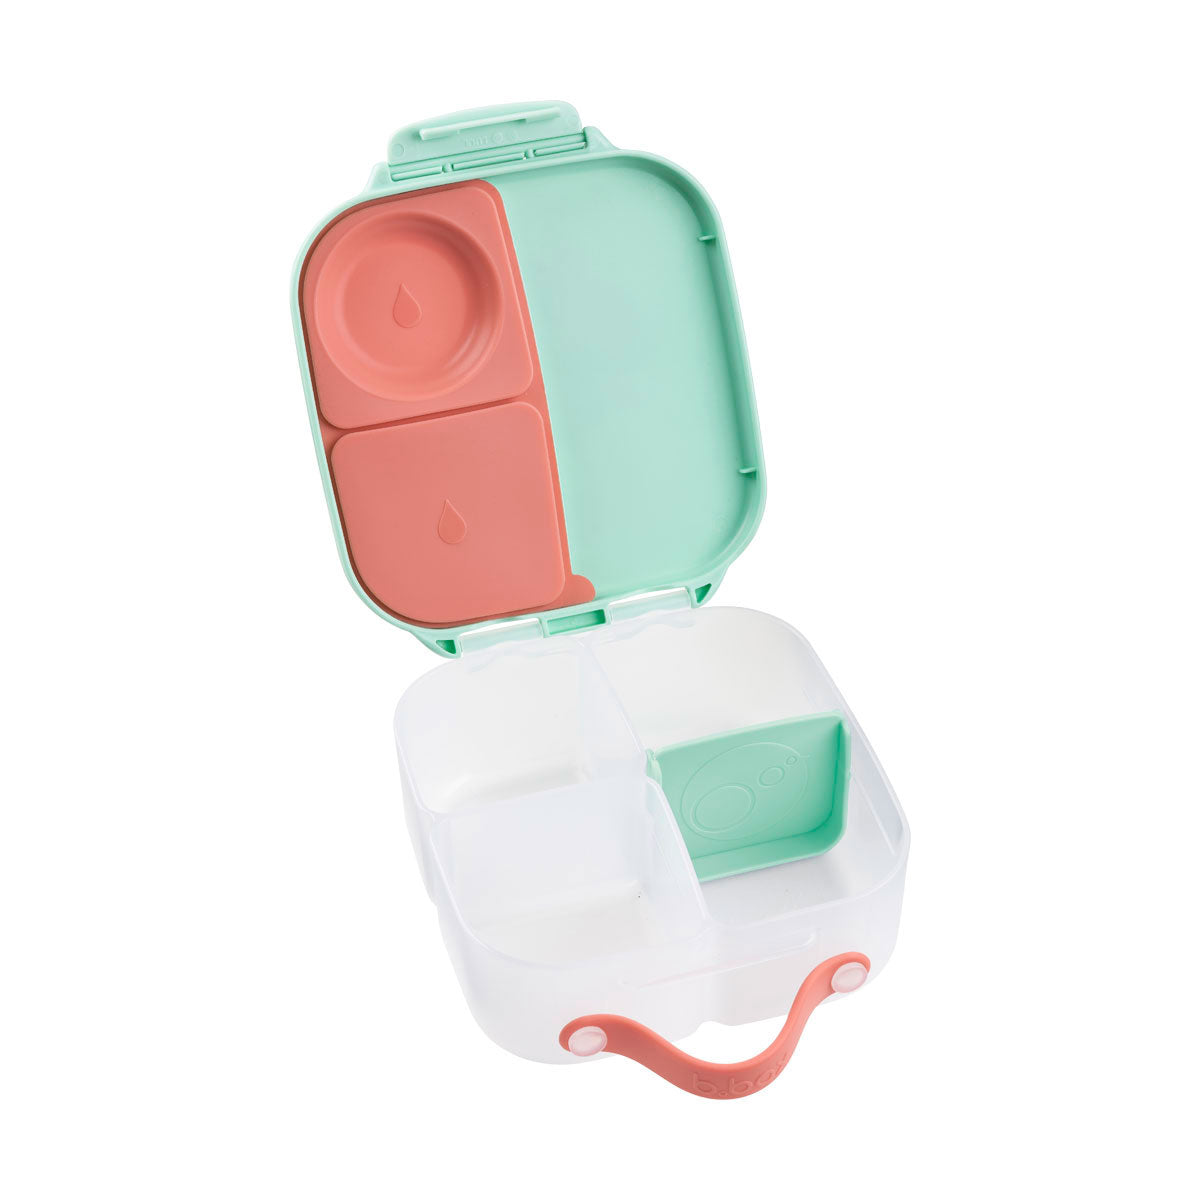 b.box Mini Lunchbox - Disney The Little Mermaid